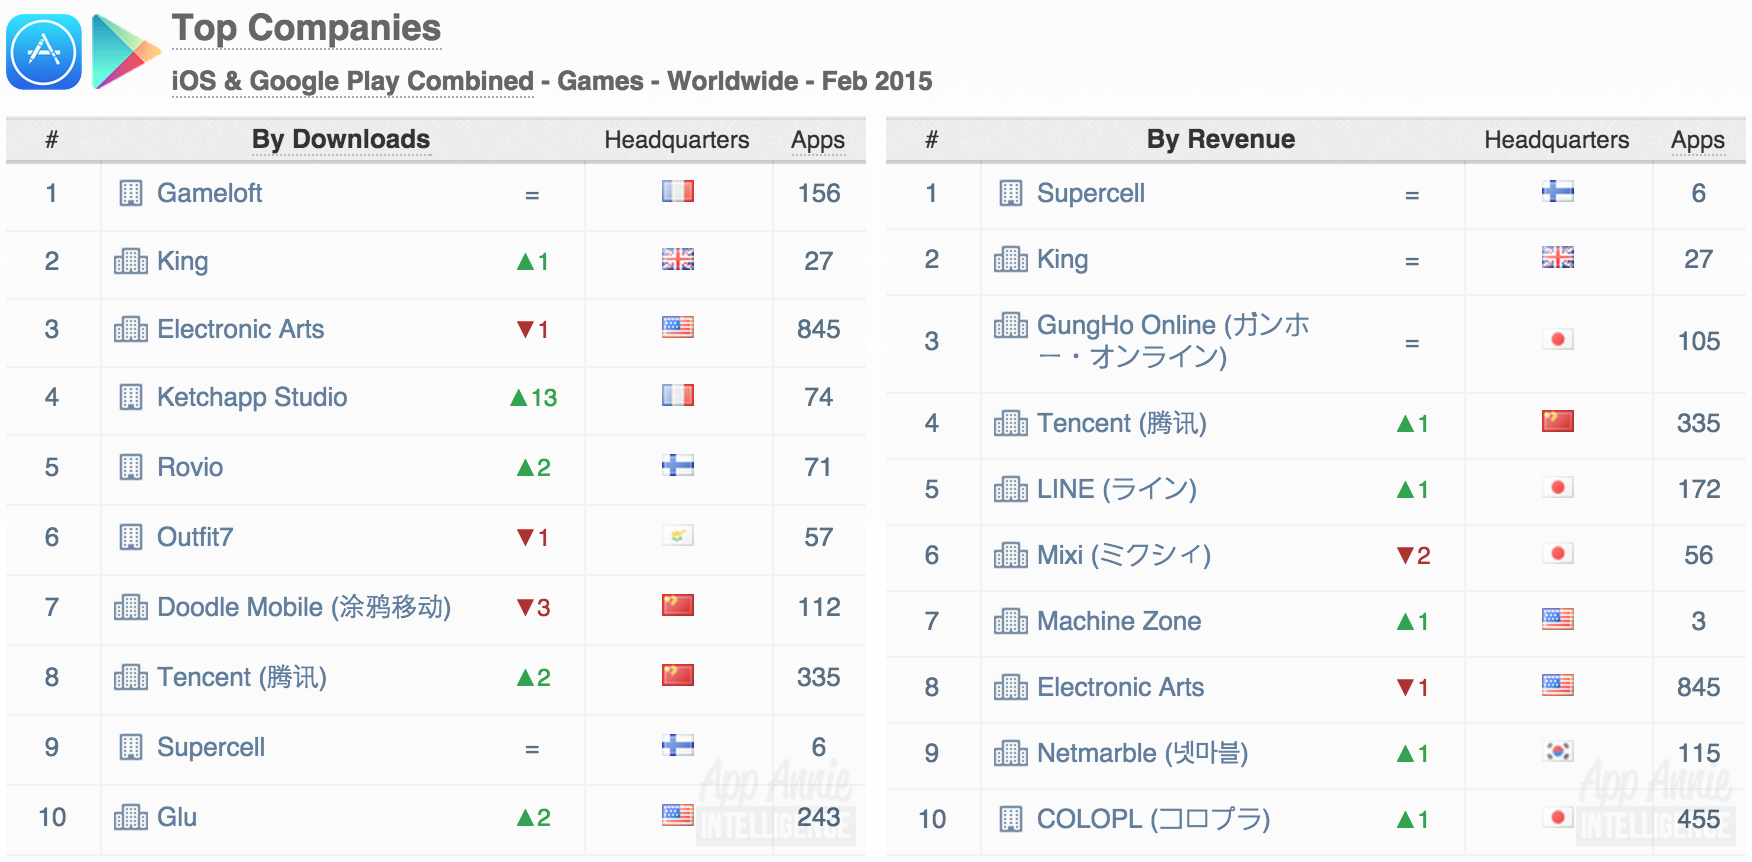 07-Top-Companies-iOS-Google-Play-Games-Worldwide-February-2015